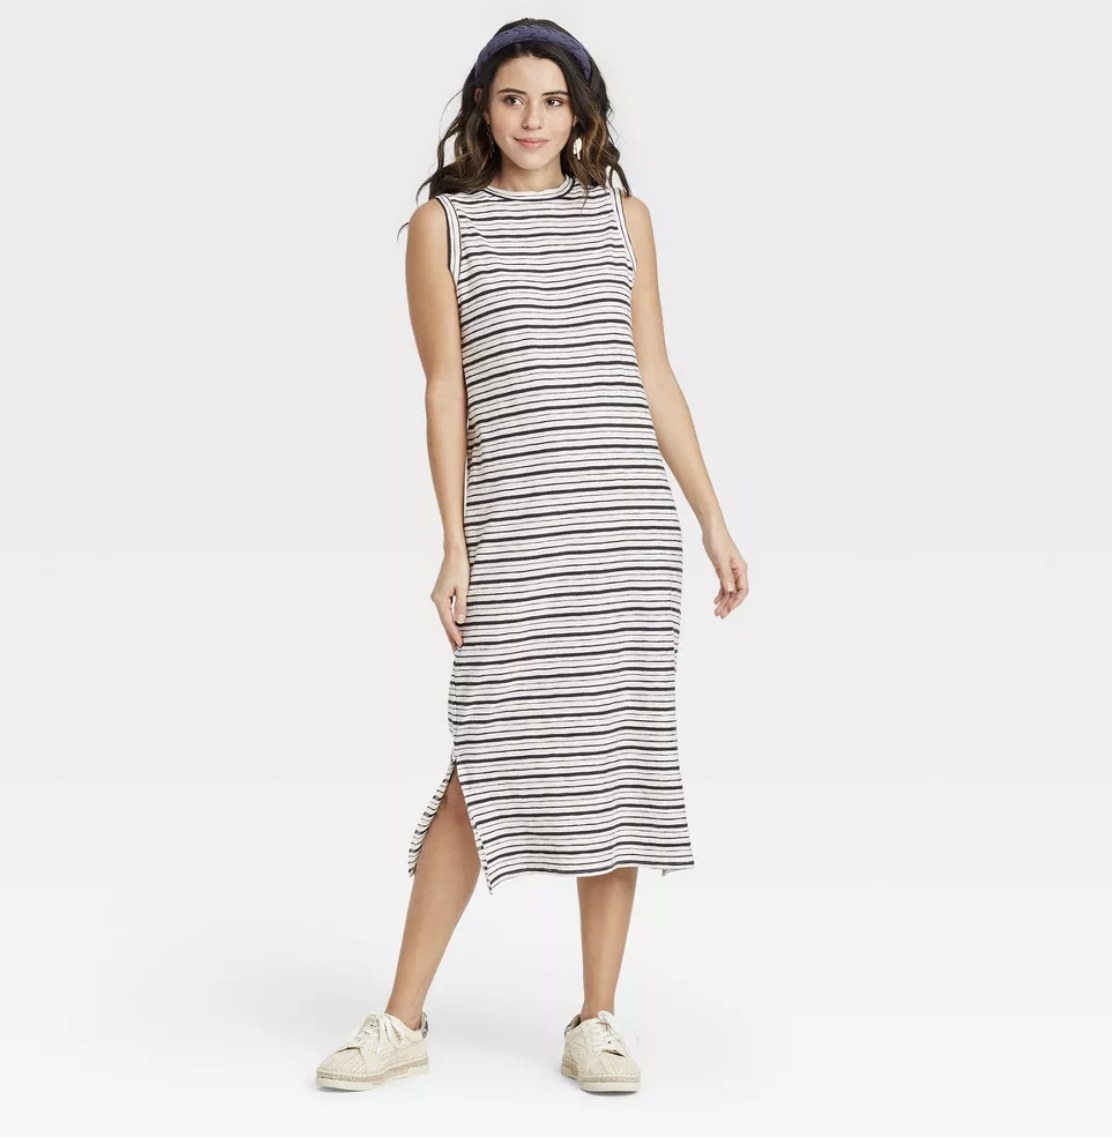 A striped cream sleeveless maxi dress